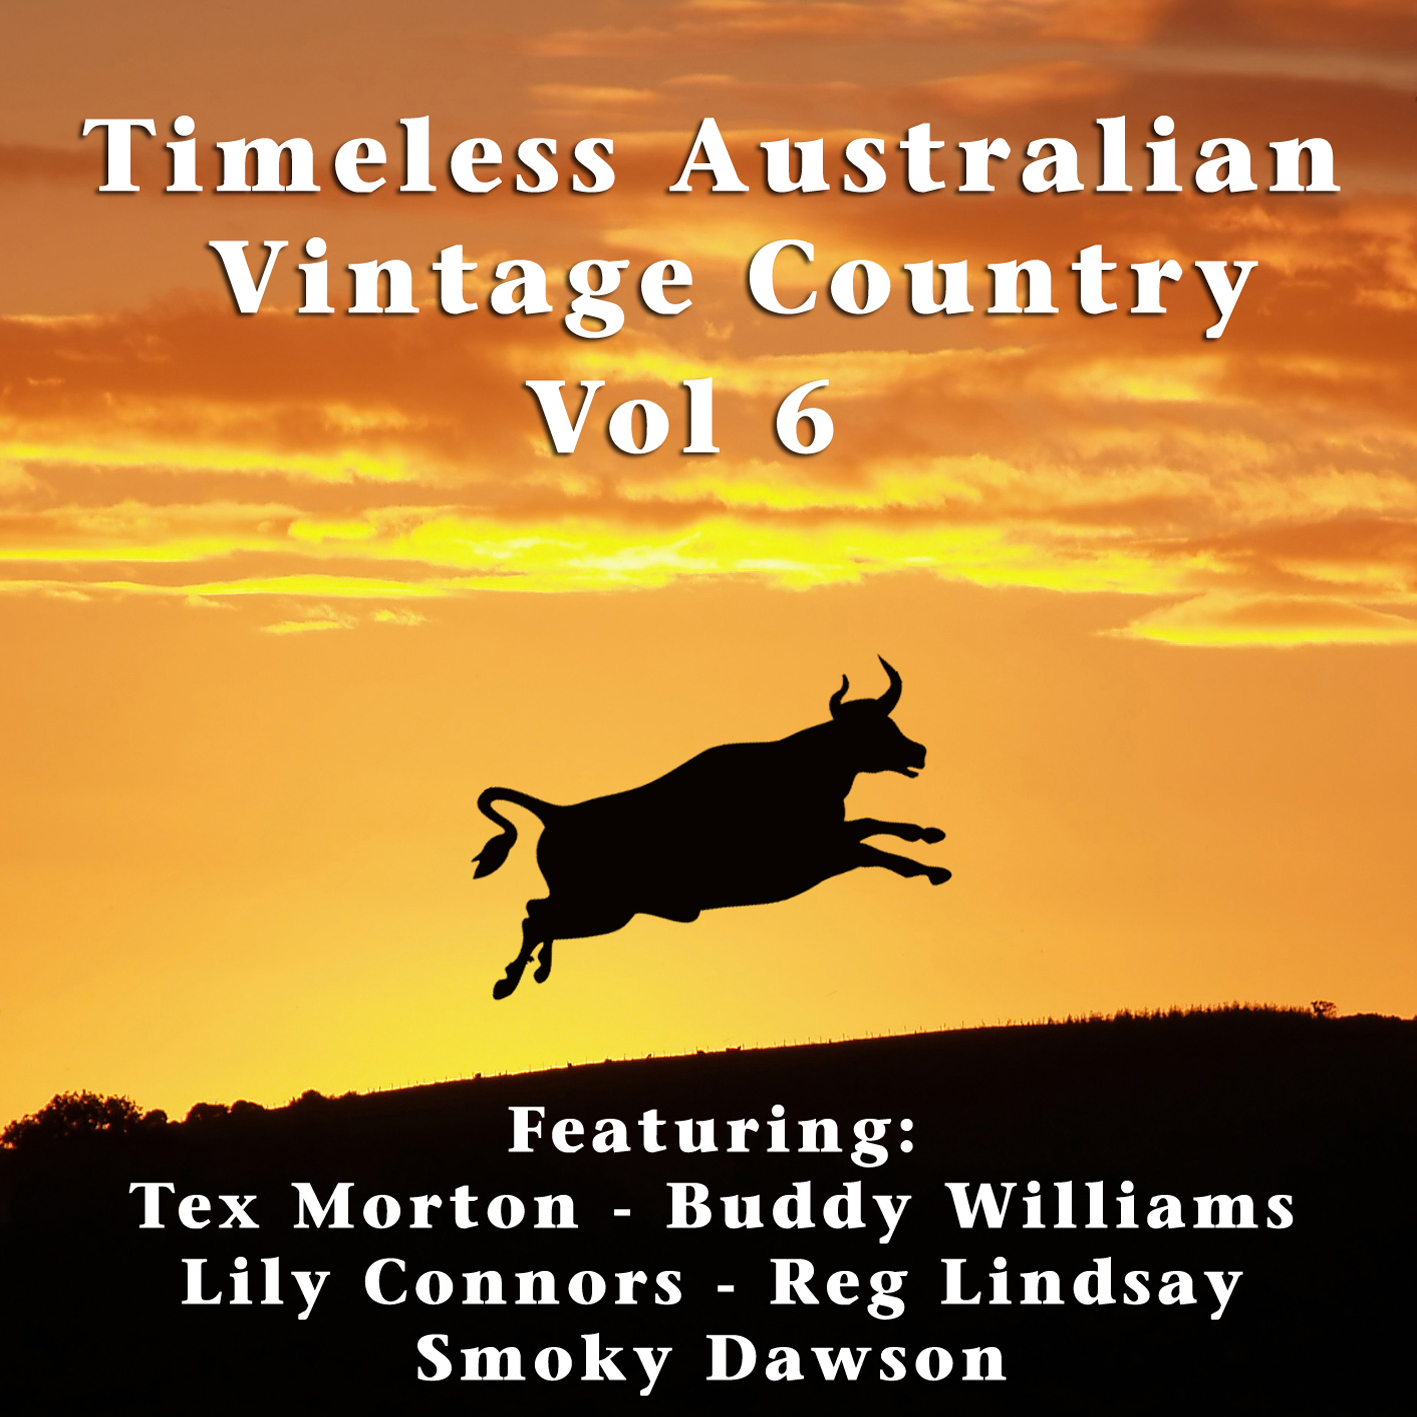 Timeless Australian Vintage Country Vol 6